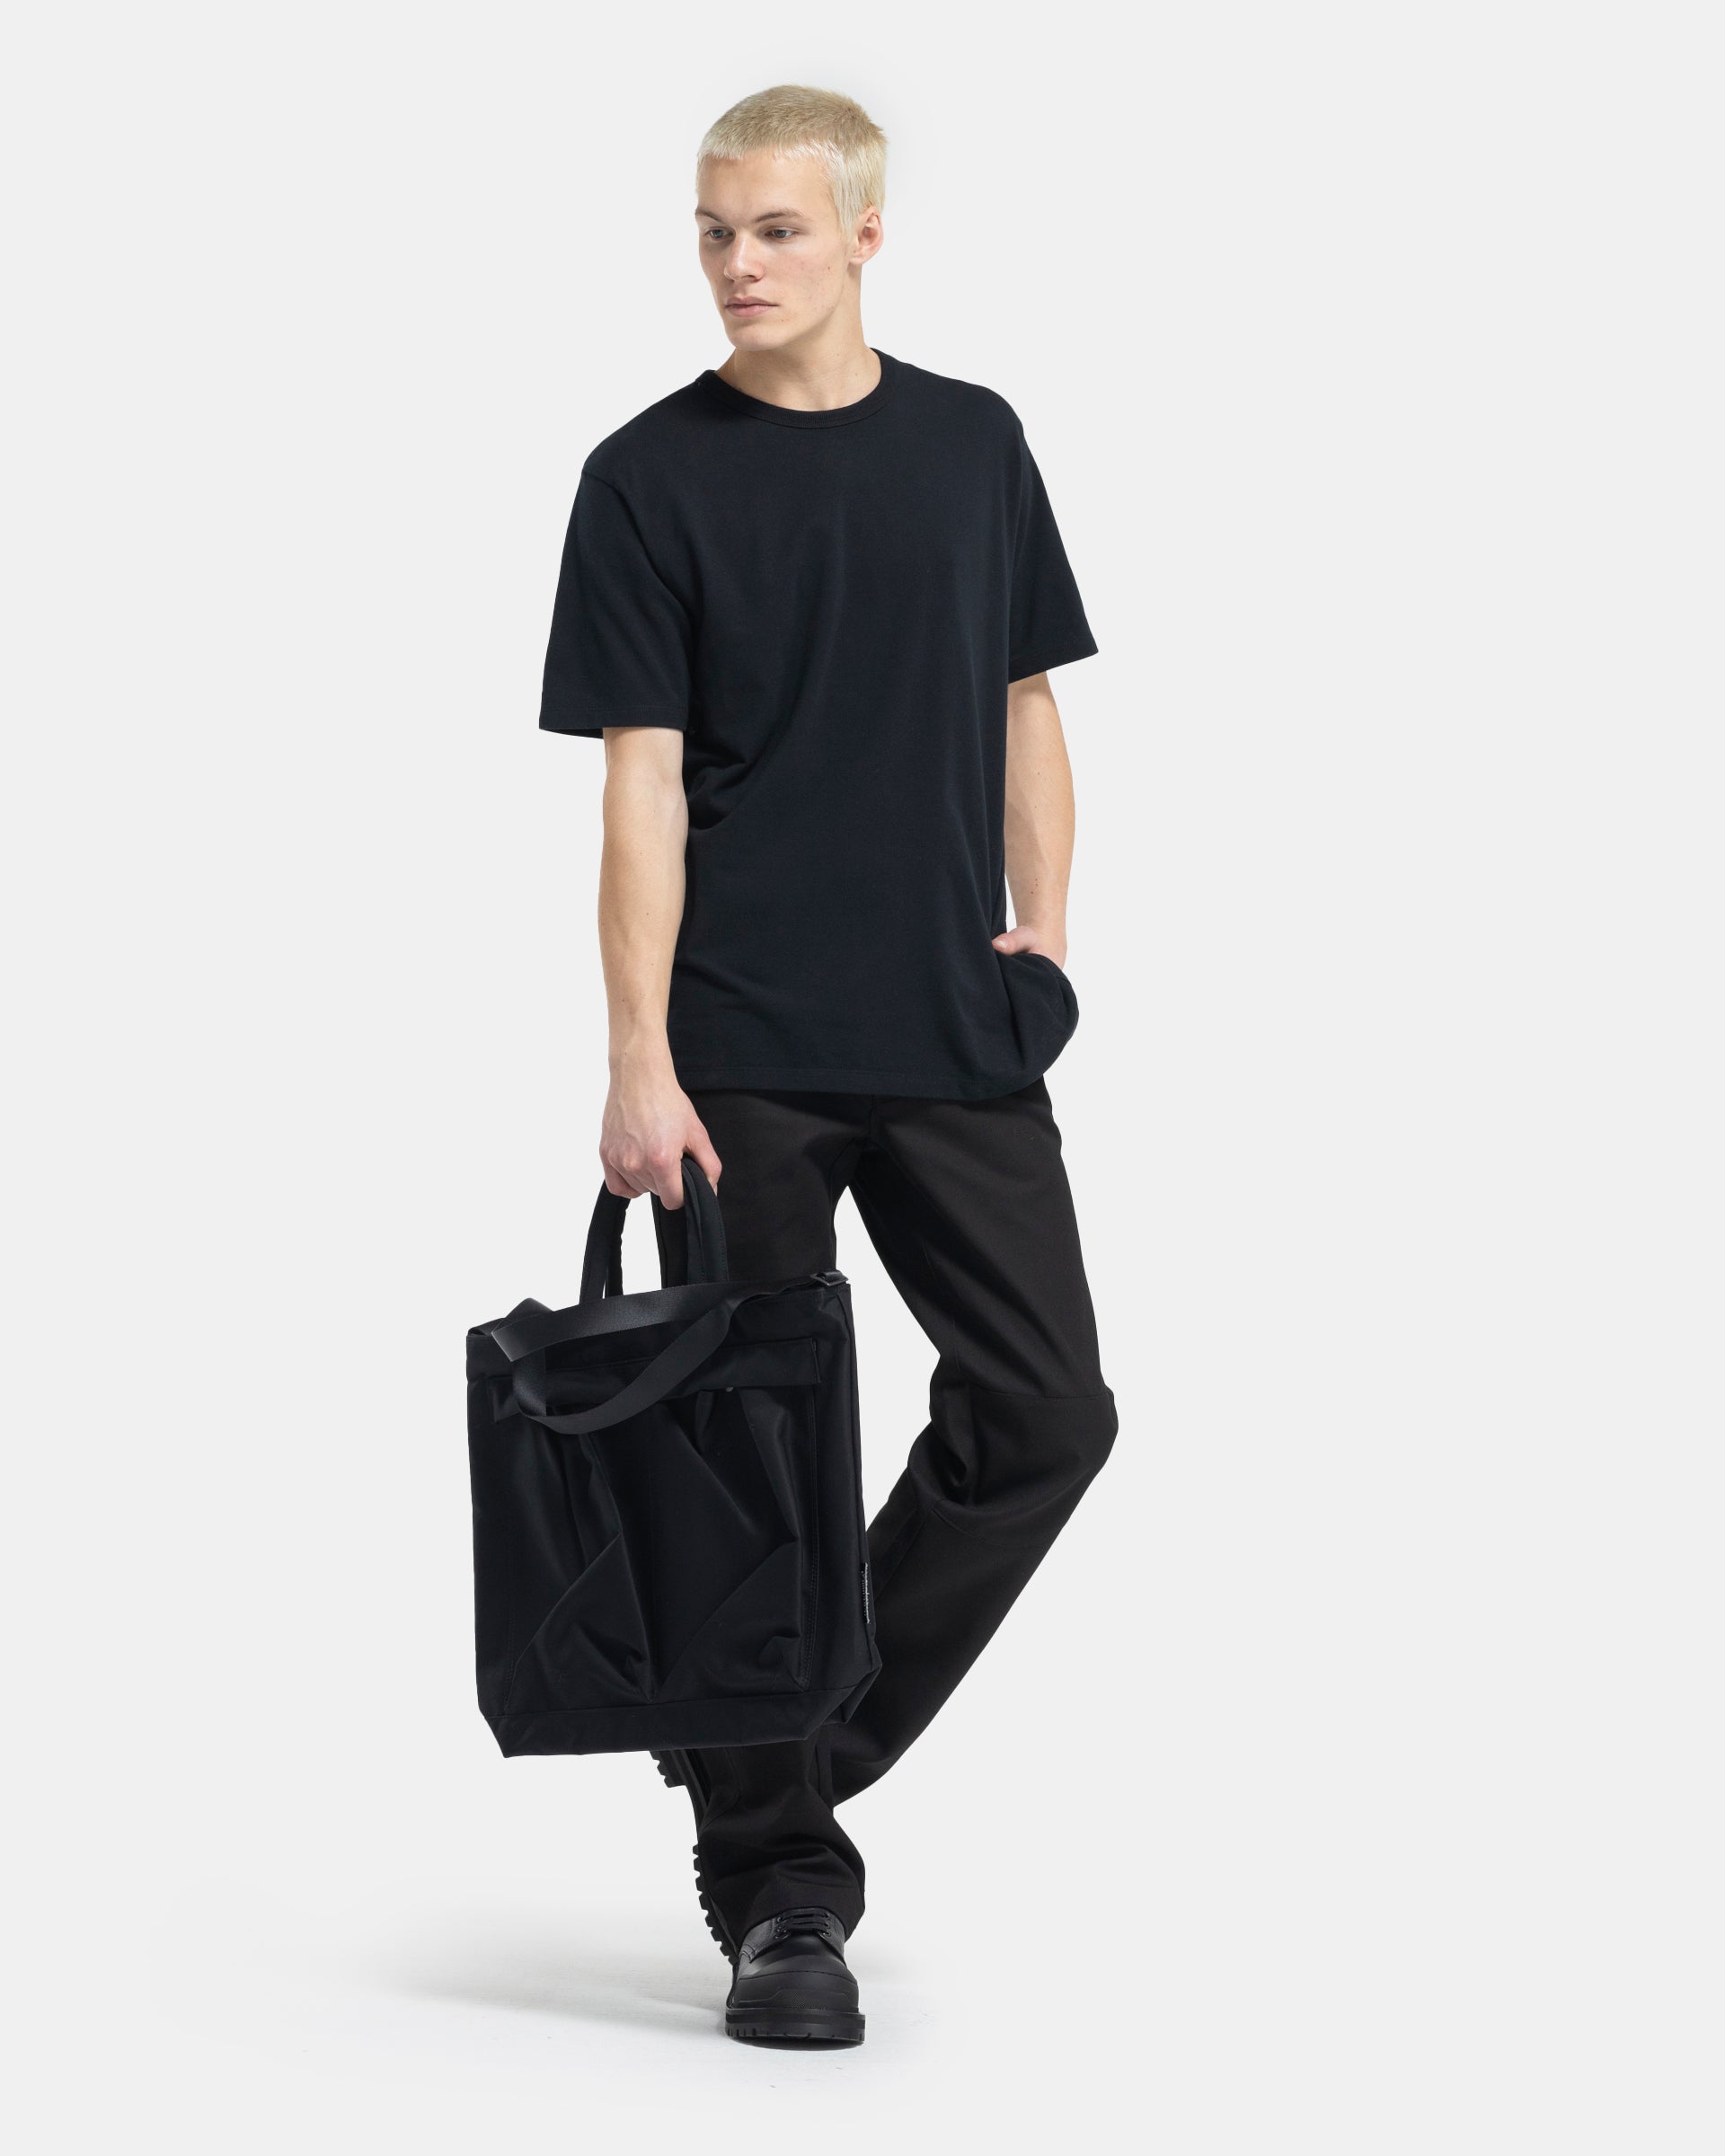 COOLMAX Jersey T-Shirt in Black